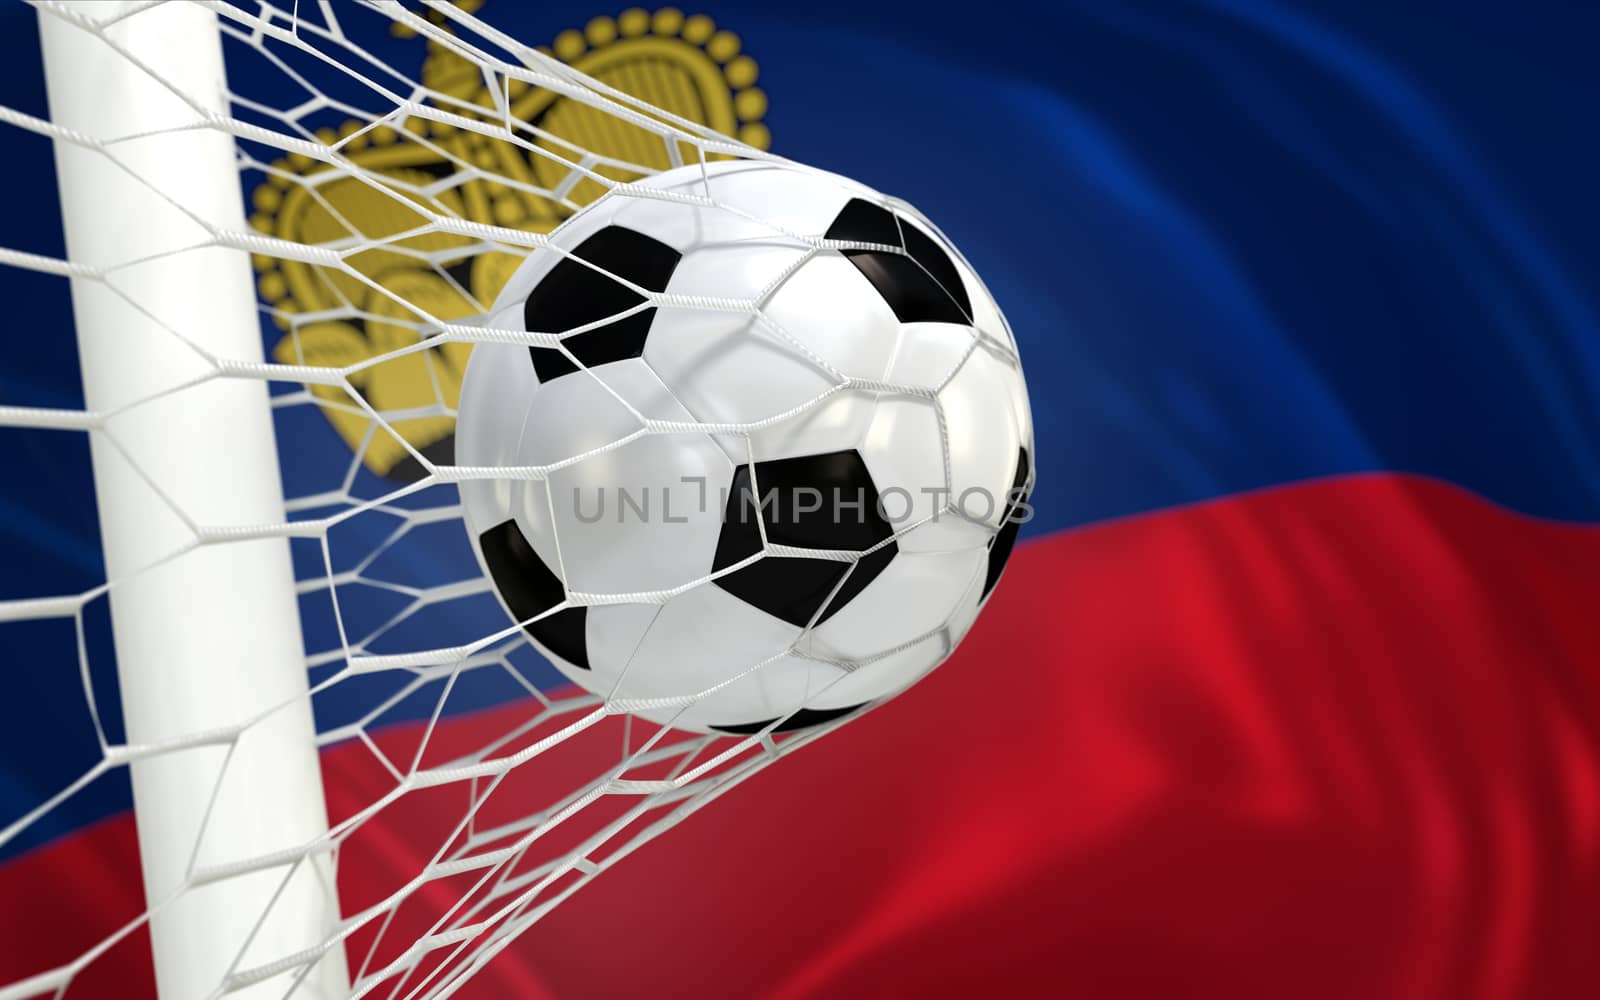 Flag of Liechtenstein and soccer ball in goal net by Barbraford